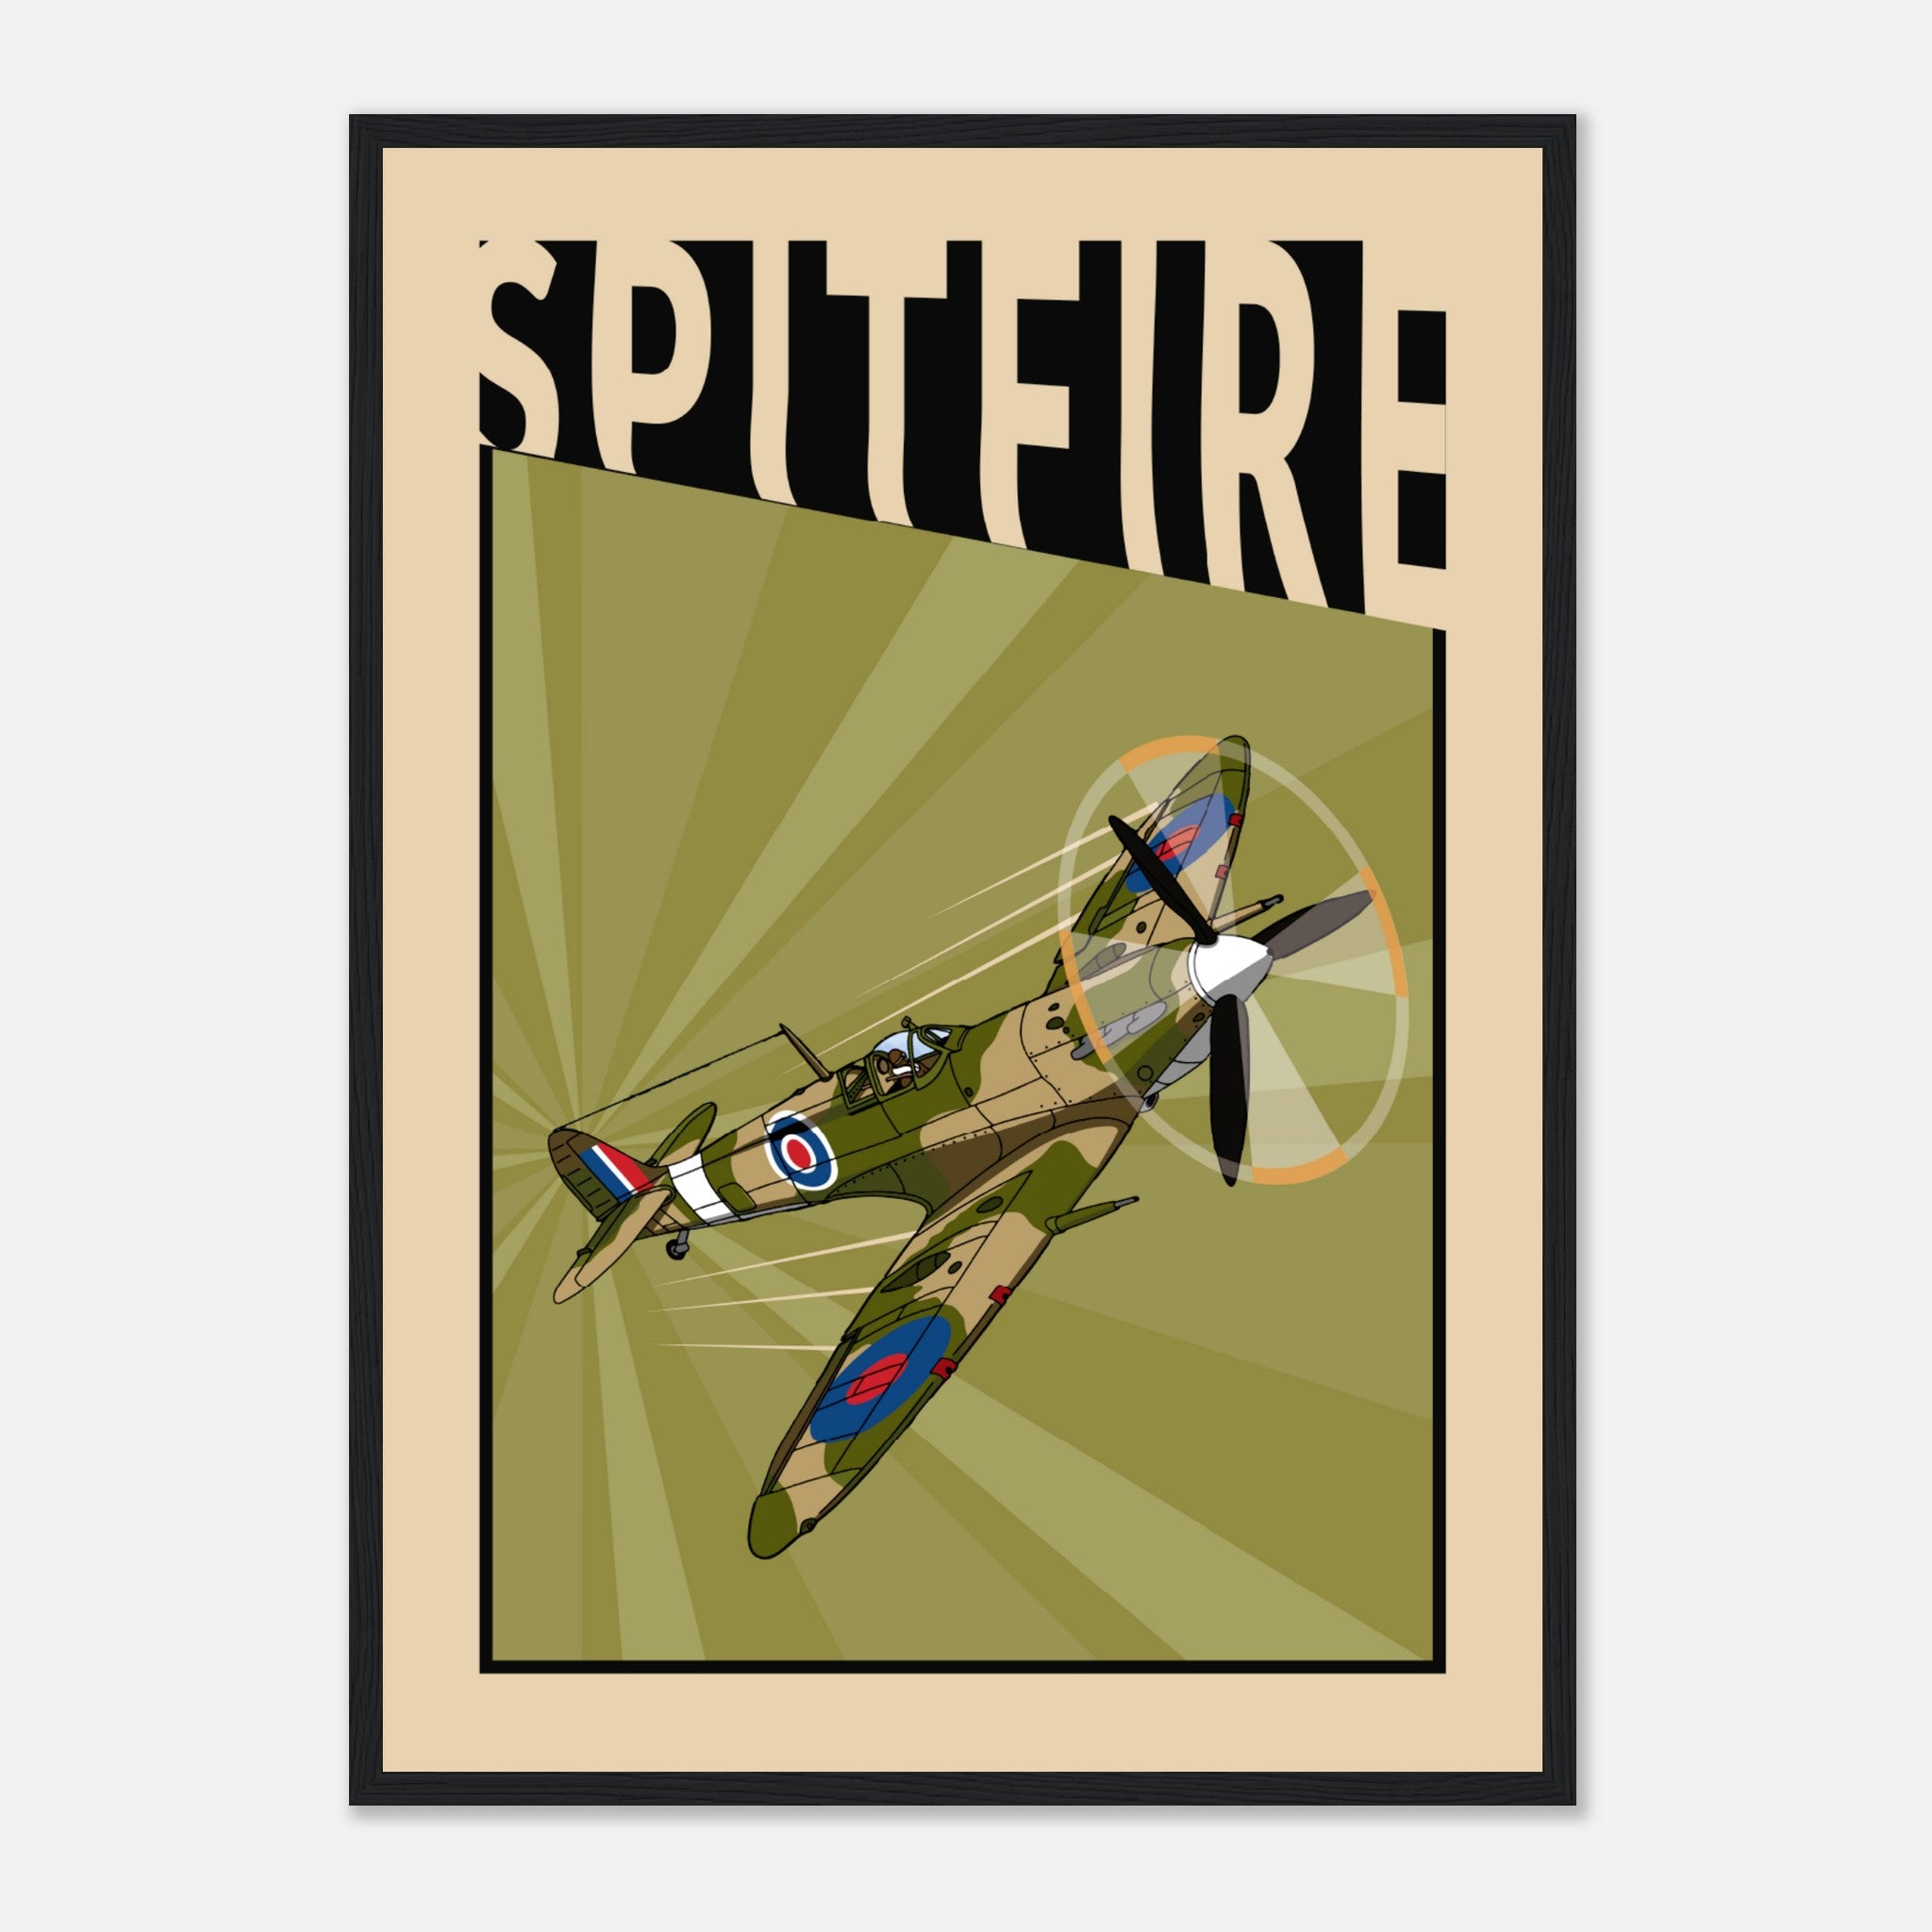 Supermarine Spitfire Poster